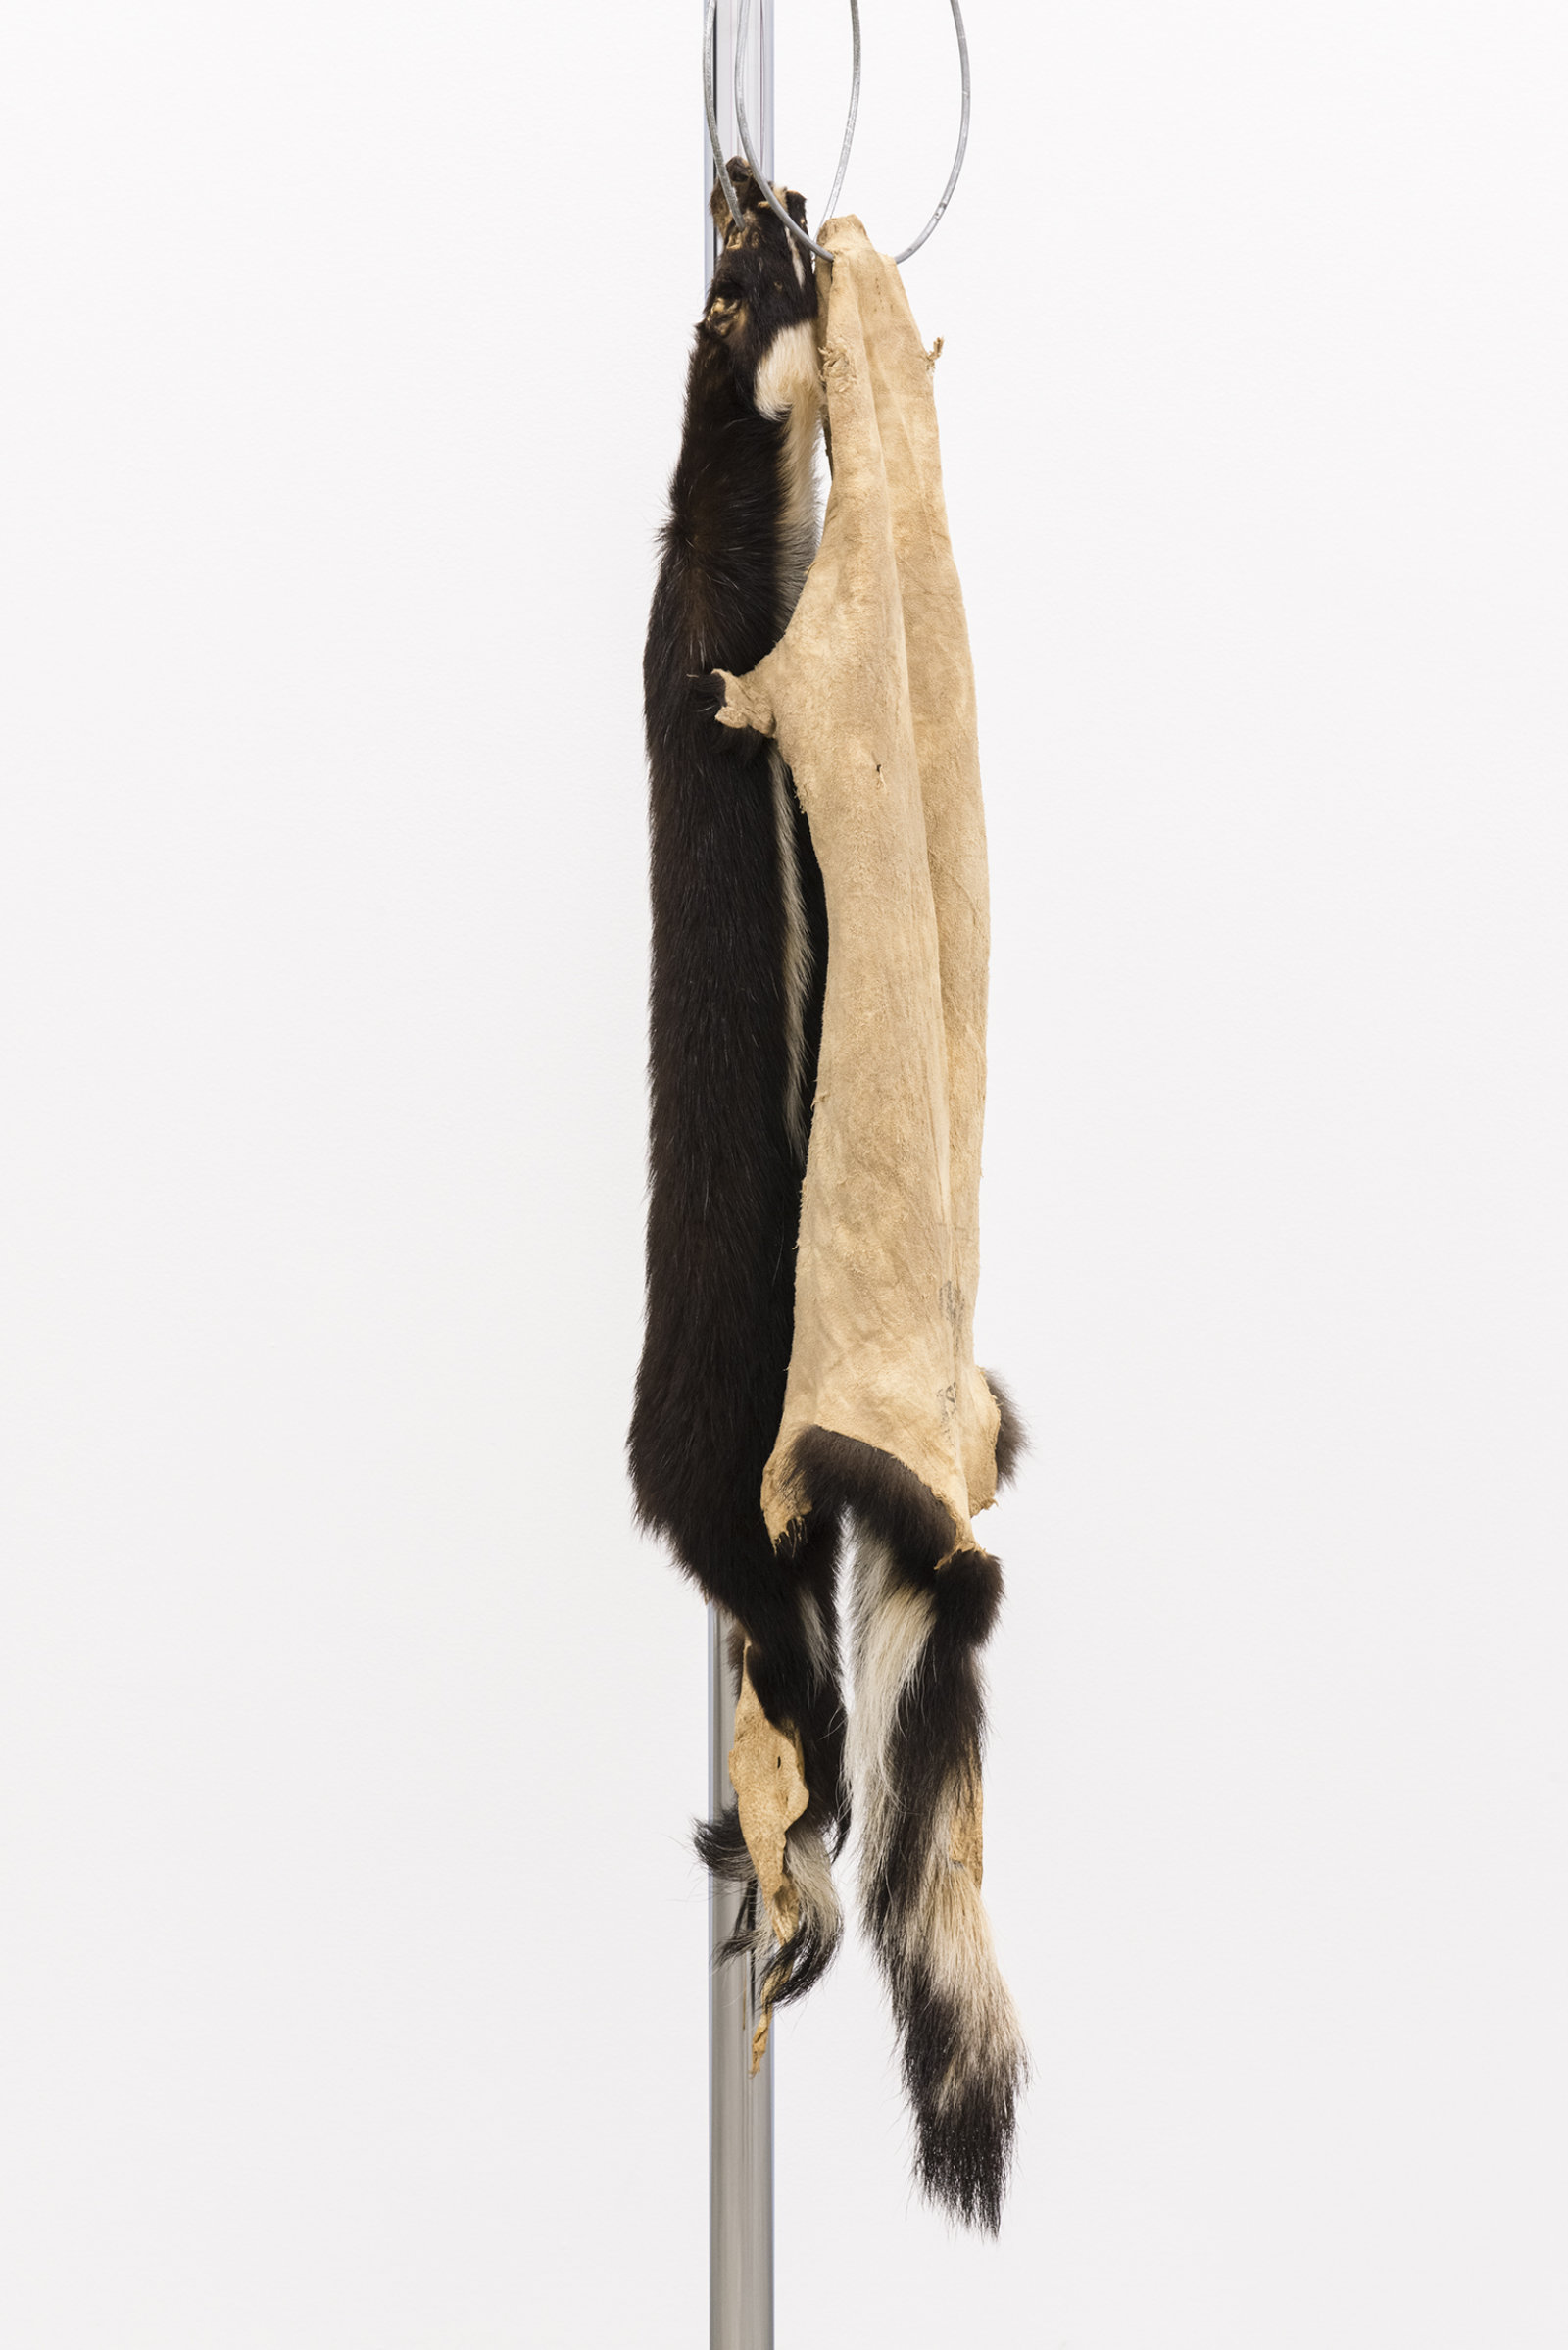 Duane Linklater, The marks left behind (detail), 2014, skunk furs, garment rack, hangers, 66 x 60 x 20 in. (168 x 151 x 52 cm)